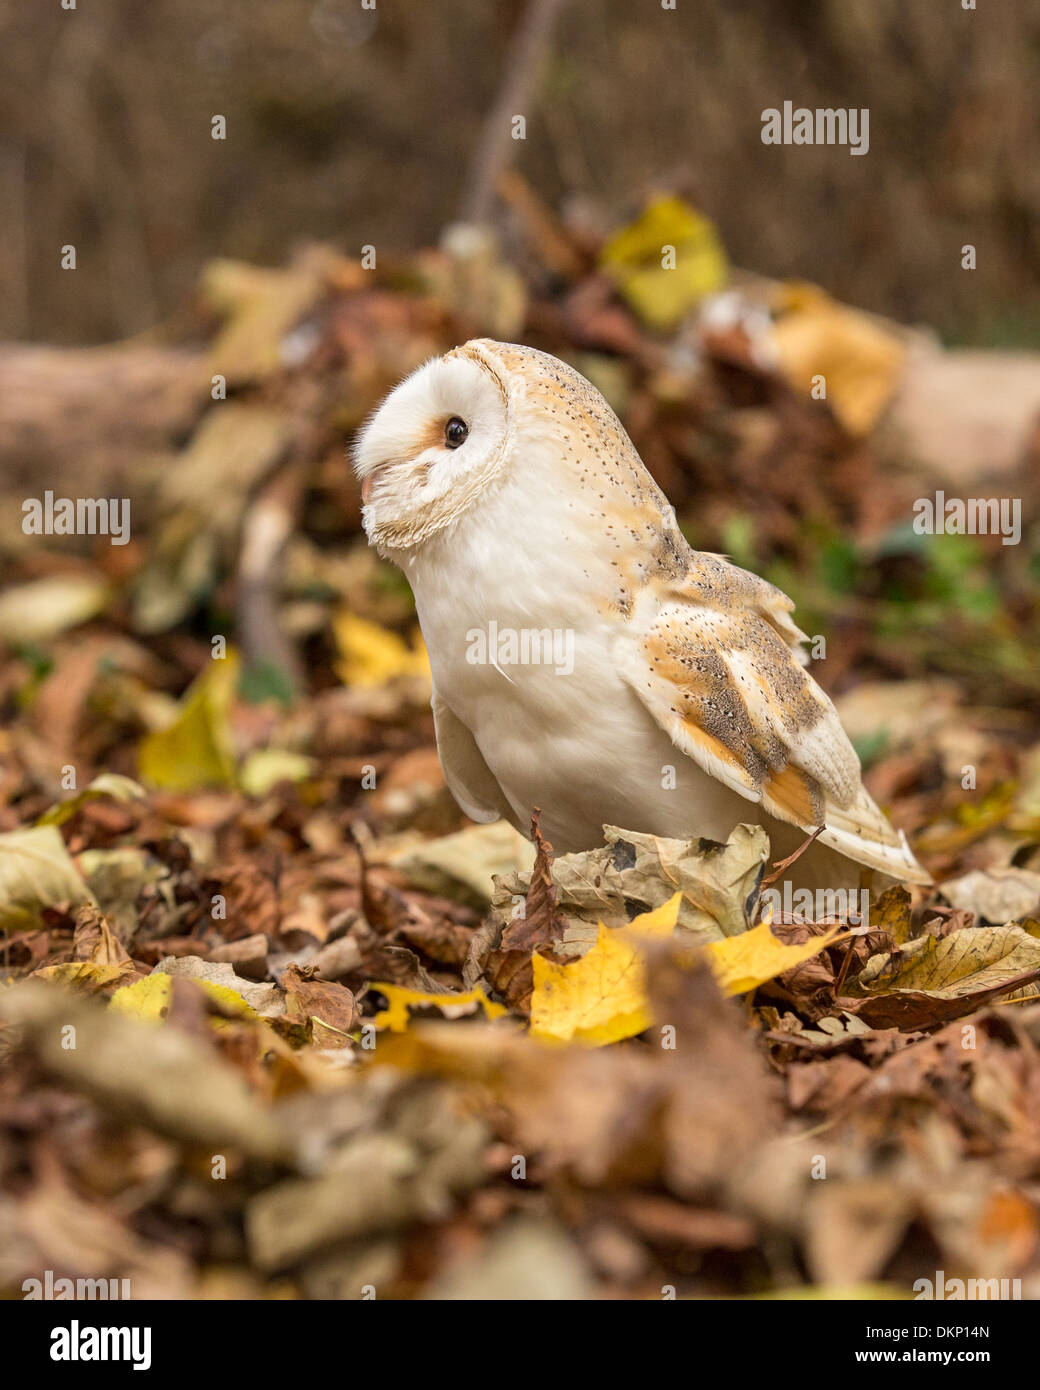 Barn owl (Tyto alba) standing among fallen leaves on the forest floor, UK Stock Photo